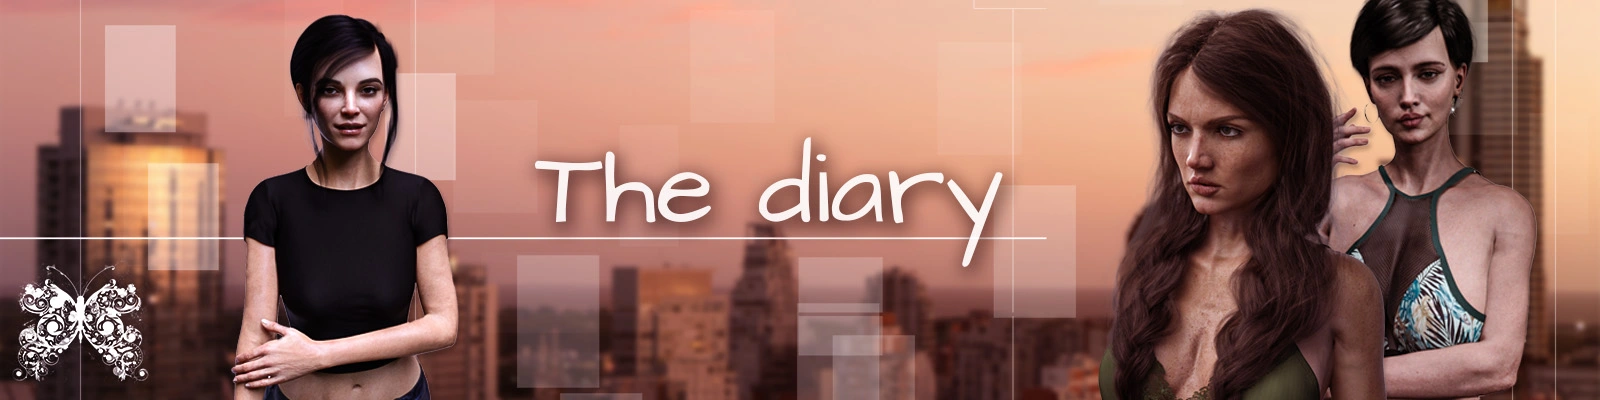 The Diary main image